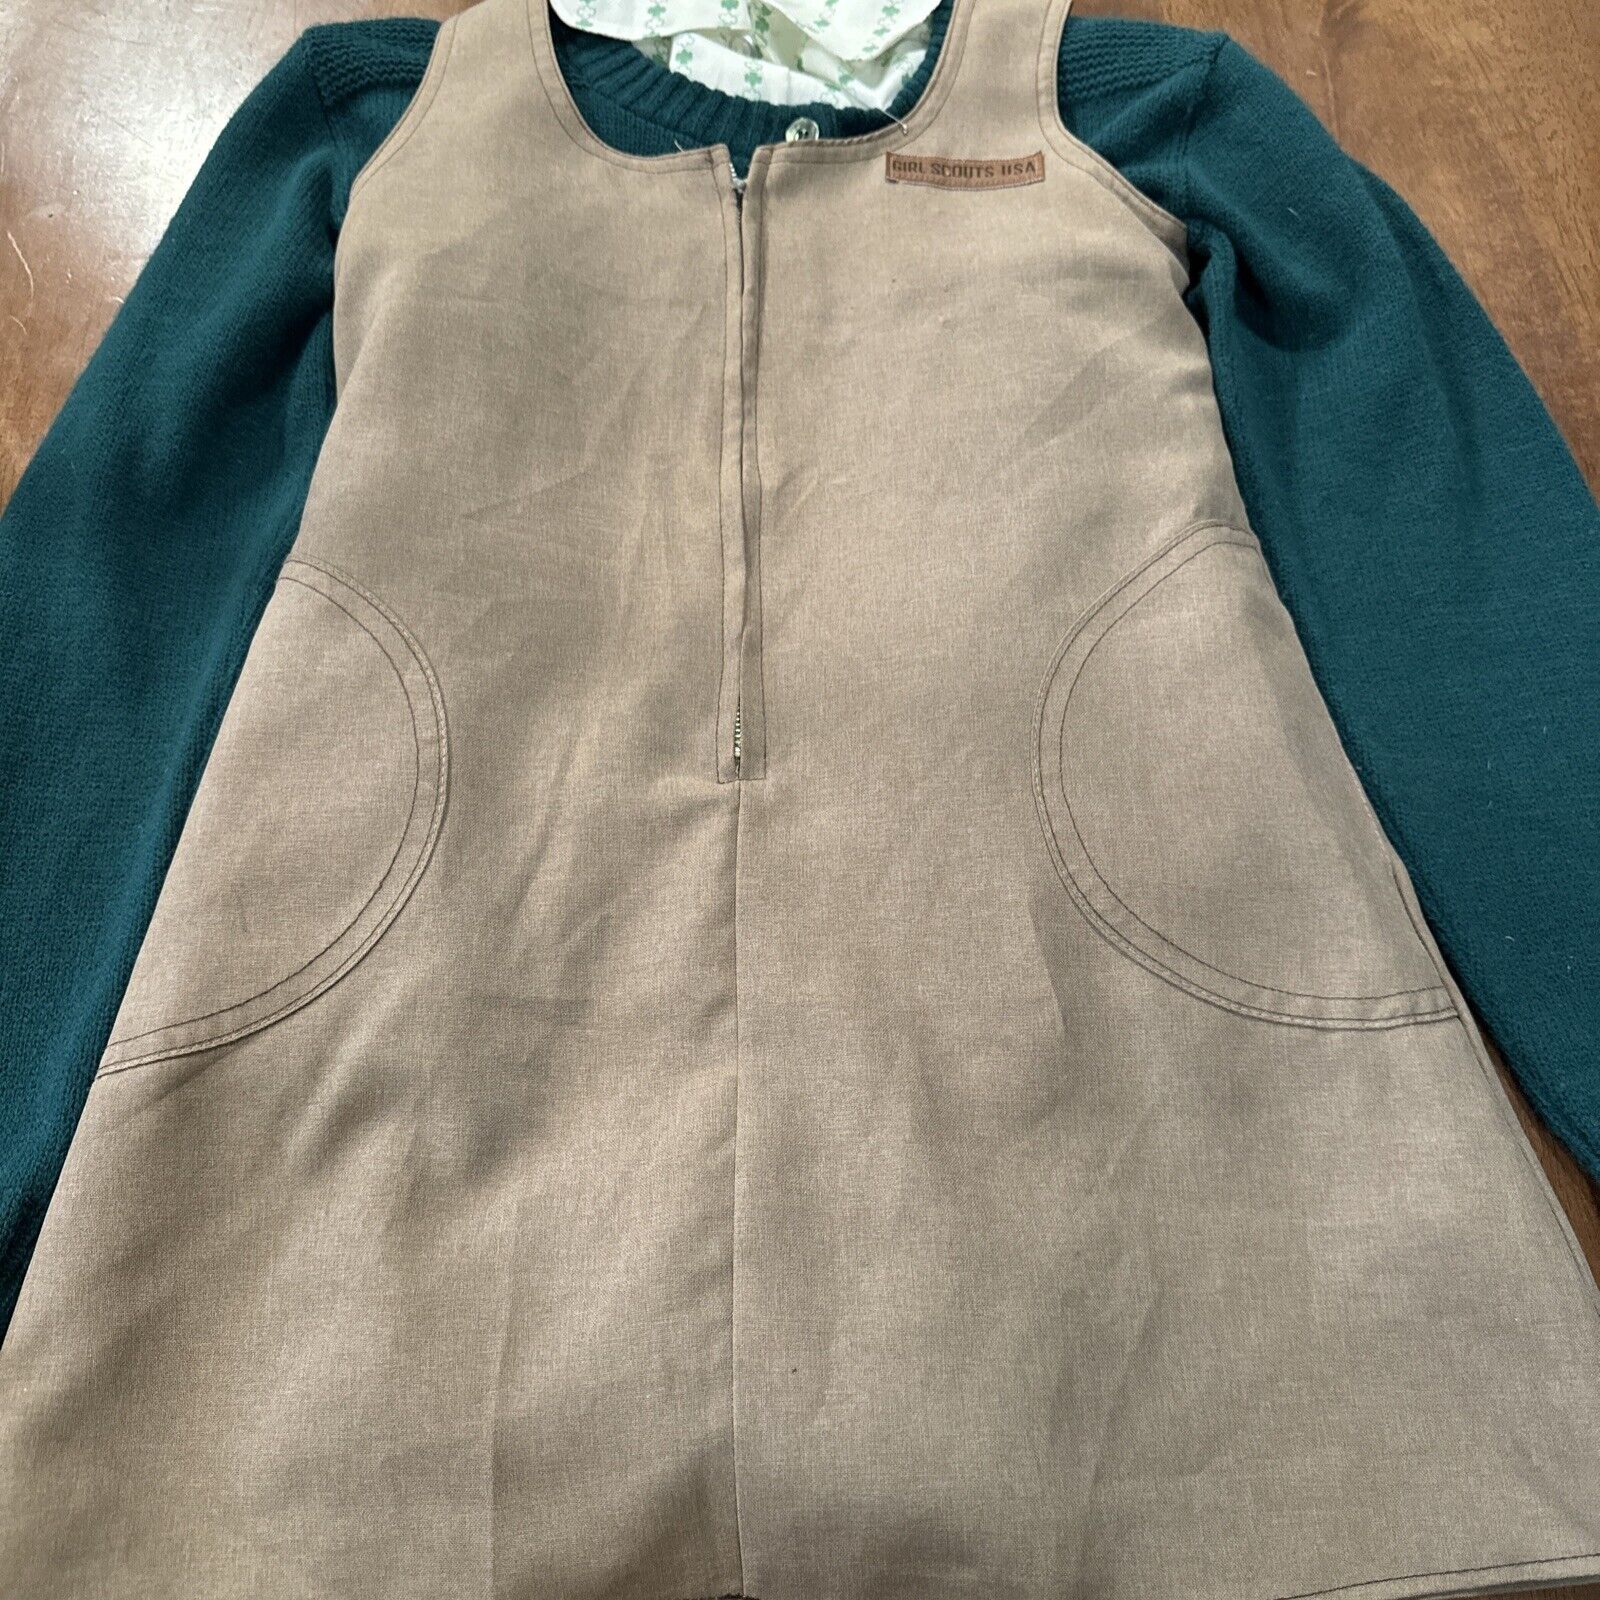 Vintage Official Girl Scouts USA Dress Uniform sz 12 Brown+GreenBrownies Uniform